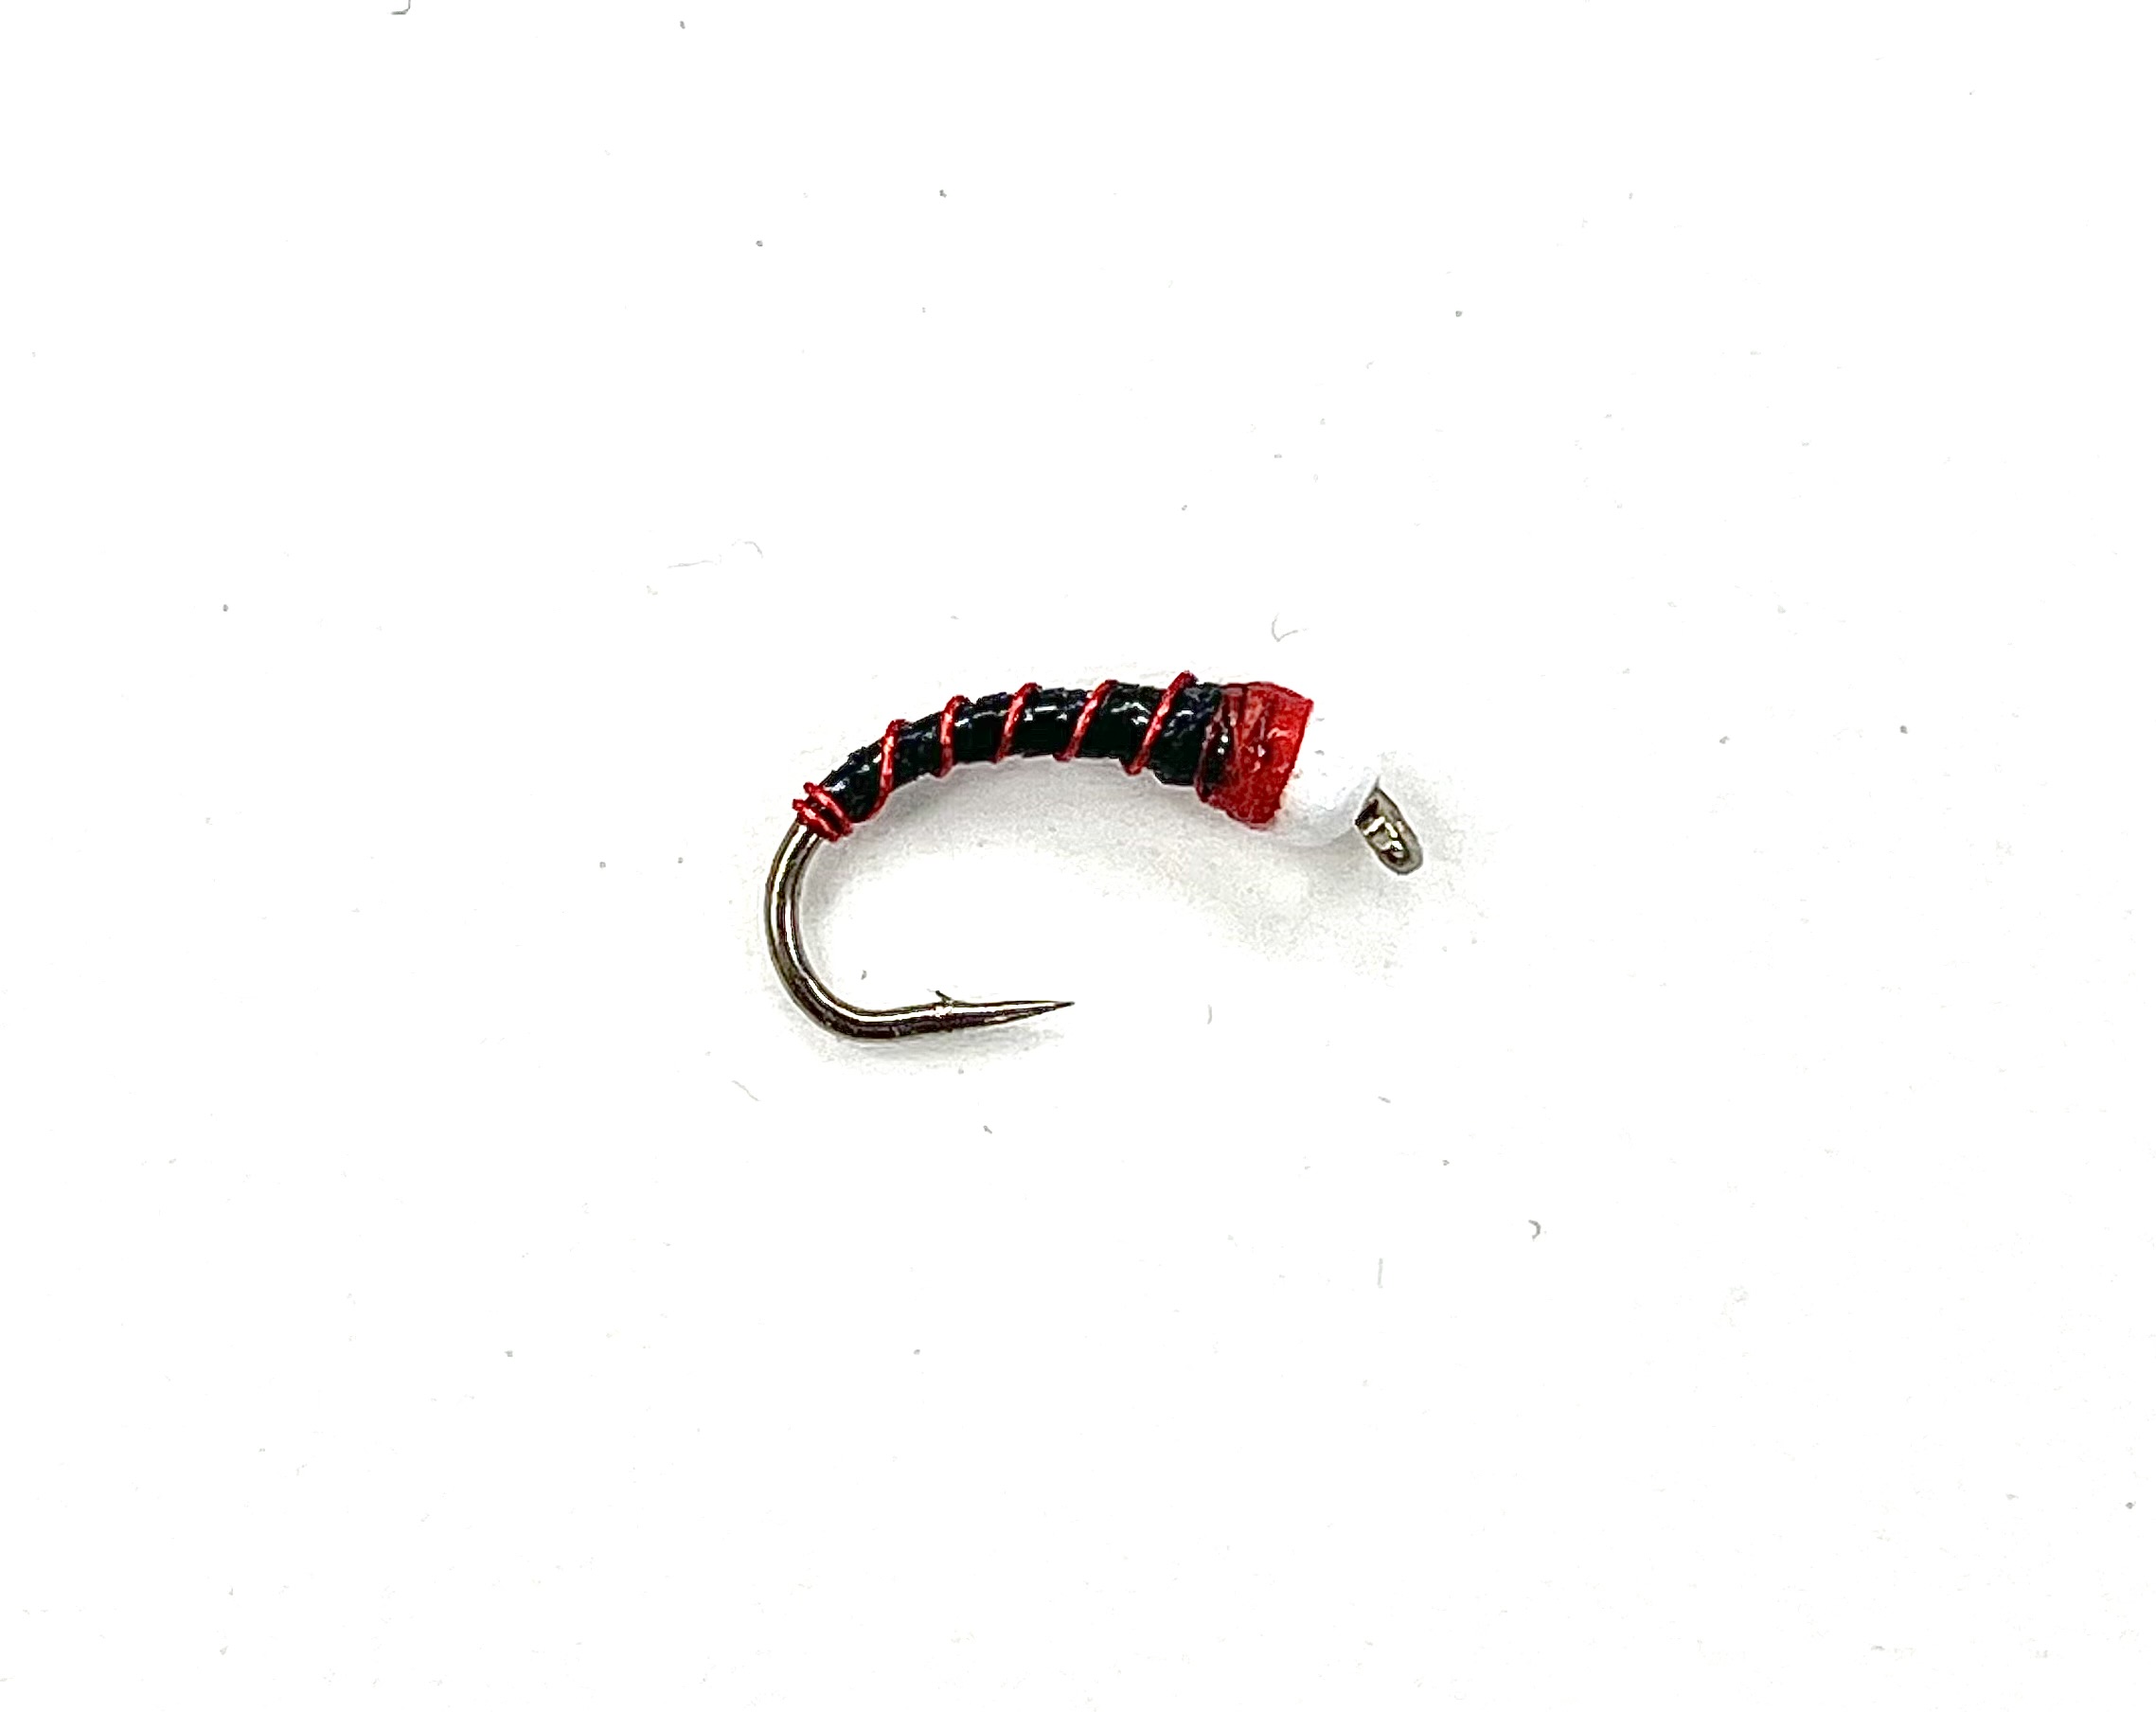 FAD BC Chironomid Pupa (White Bead) - Black/Red - Size 16